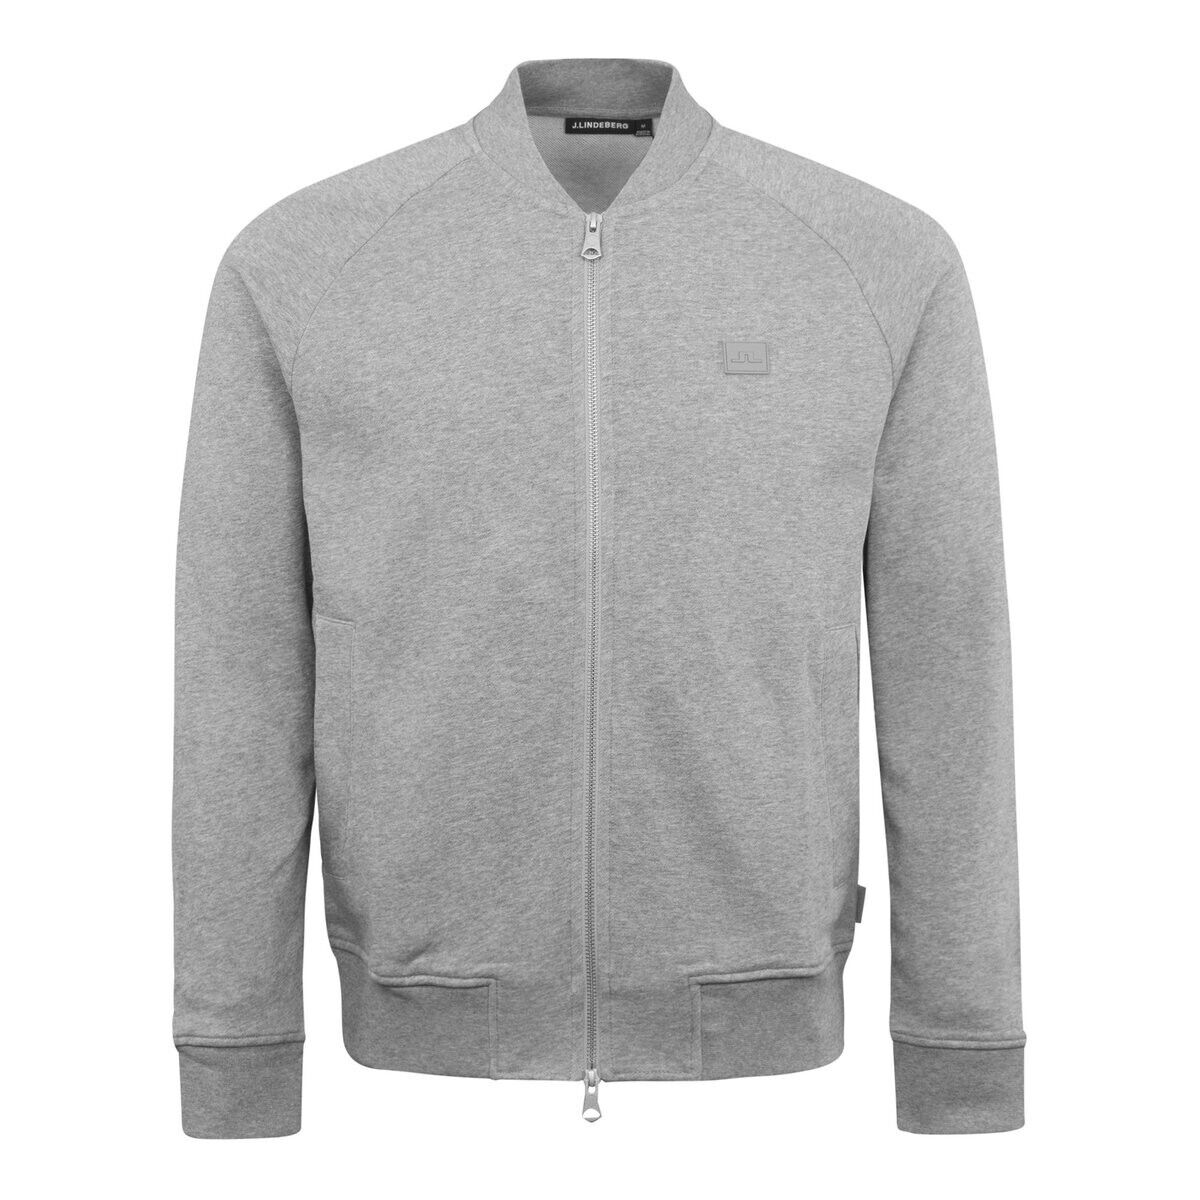 j lindeberg josef full zip sweater shirt grey melange uk size large